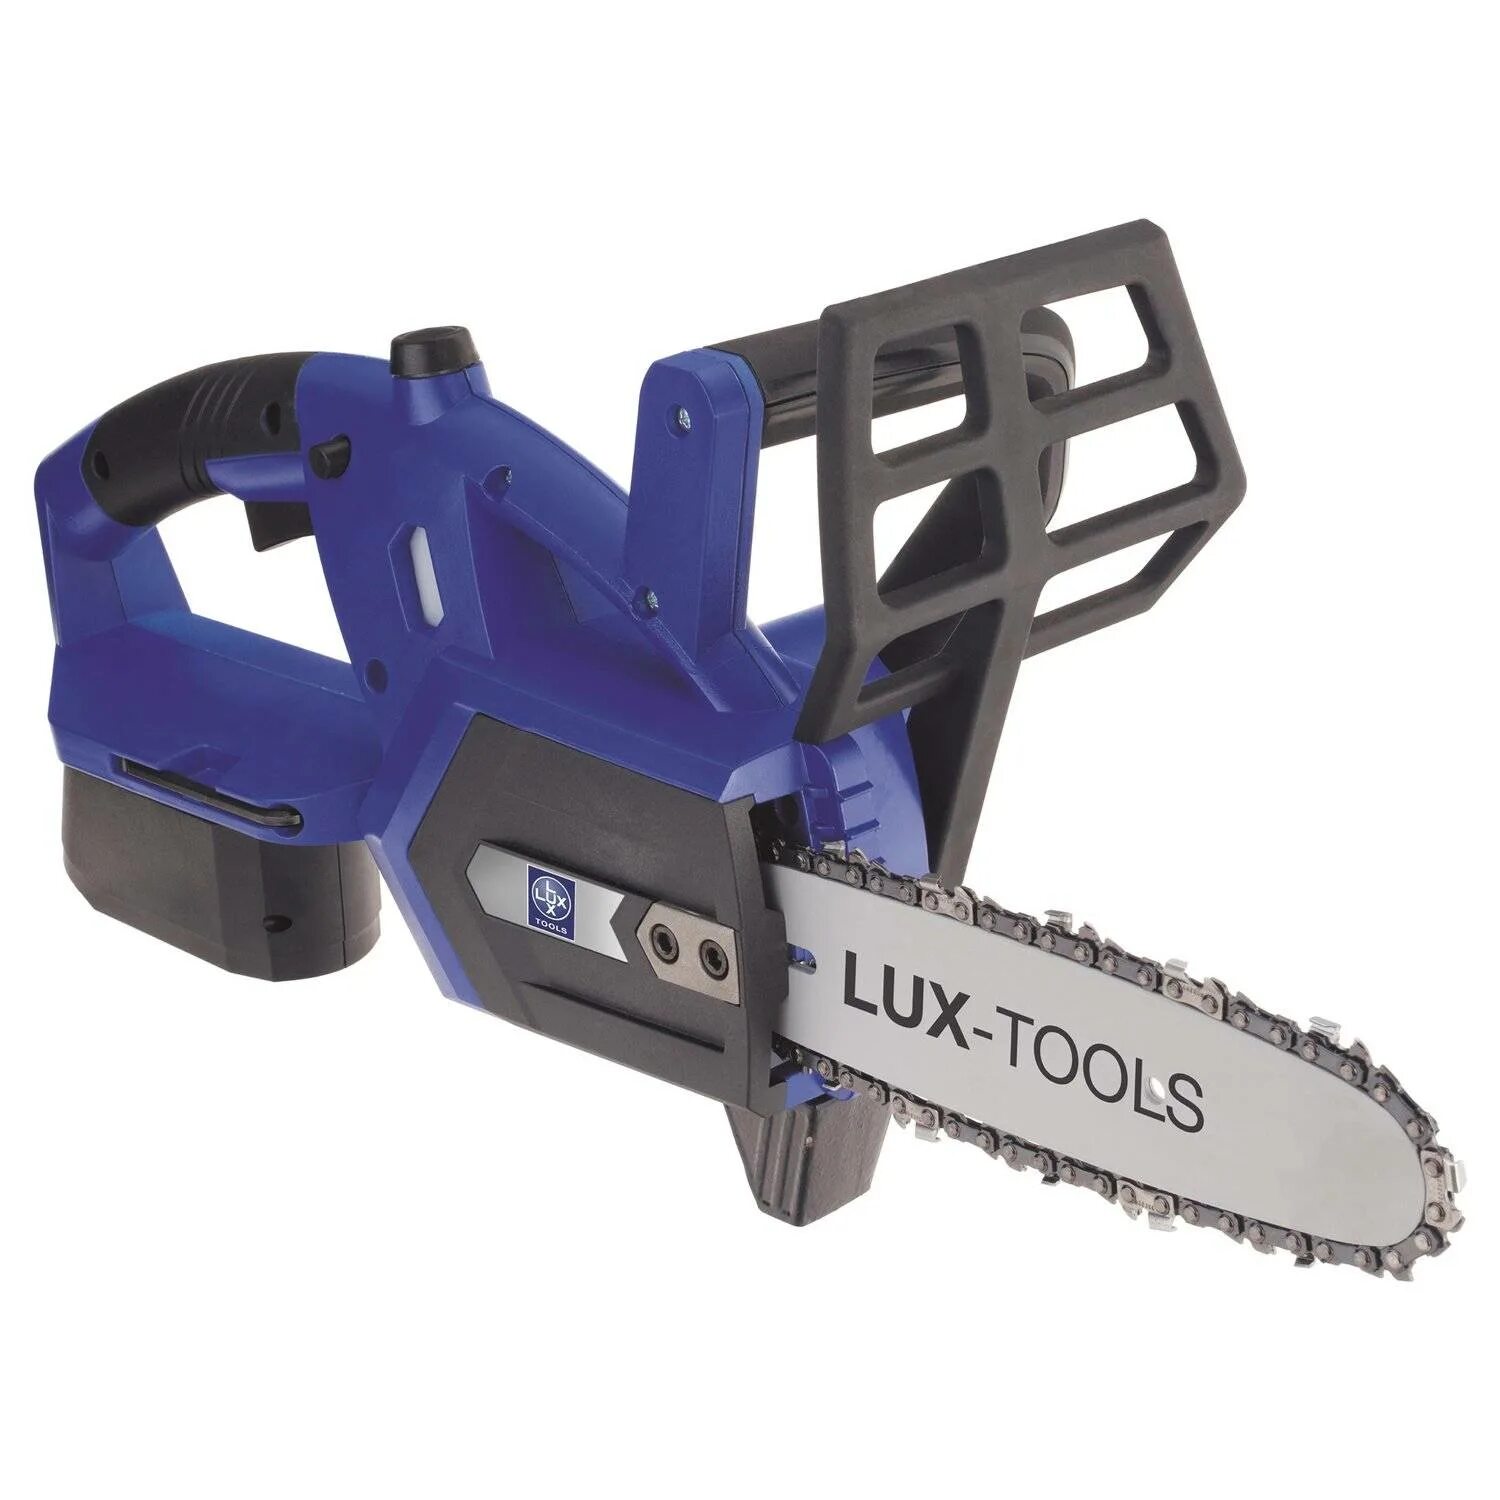 Lux tools аккумуляторная. Аккумуляторная цепная пила luxtol. Цепная пила Lux Tools. Lux Tools пила аккумуляторная. Аккумуляторная цепная пила luxtol 20 v.